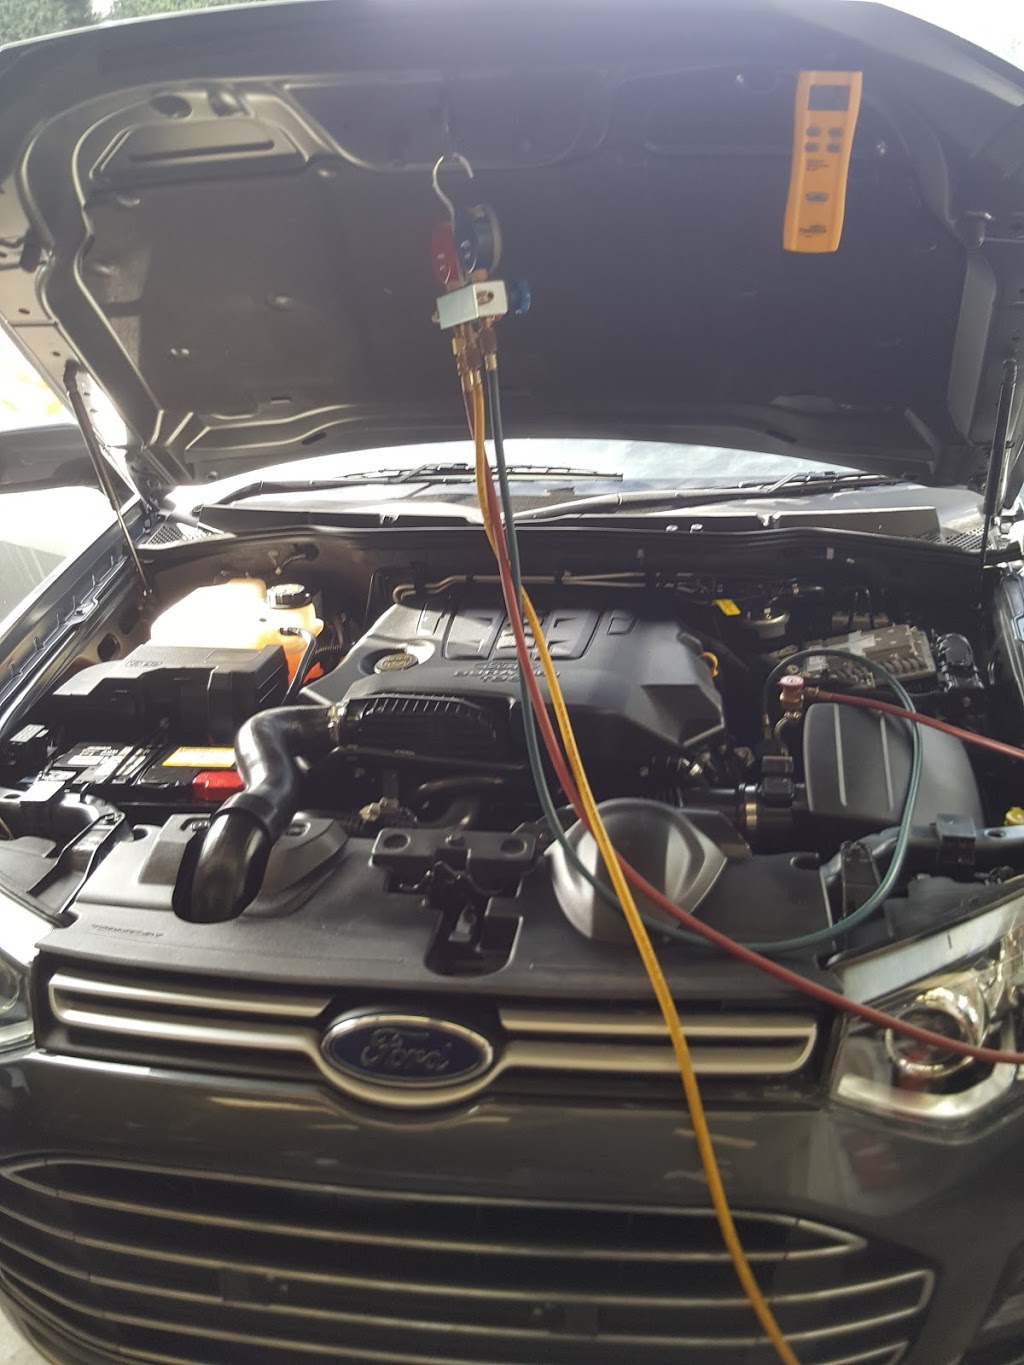 Karun Air Cool | car repair | 2 Lyneham Pl, West Pennant Hills NSW 2125, Australia | 0400544465 OR +61 400 544 465